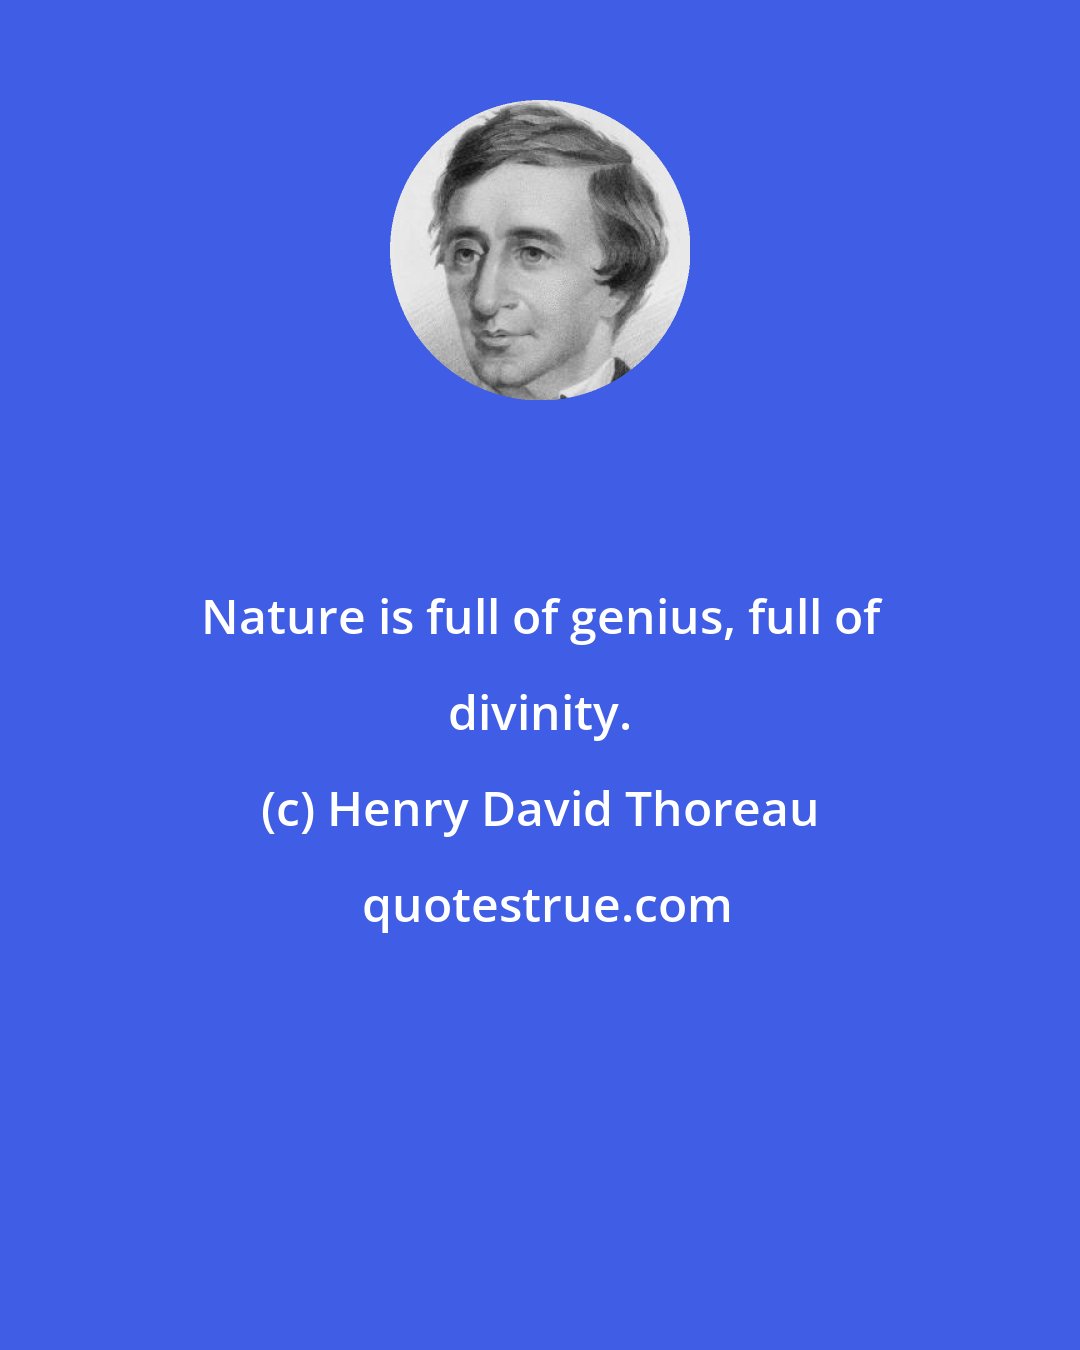 Henry David Thoreau: Nature is full of genius, full of divinity.